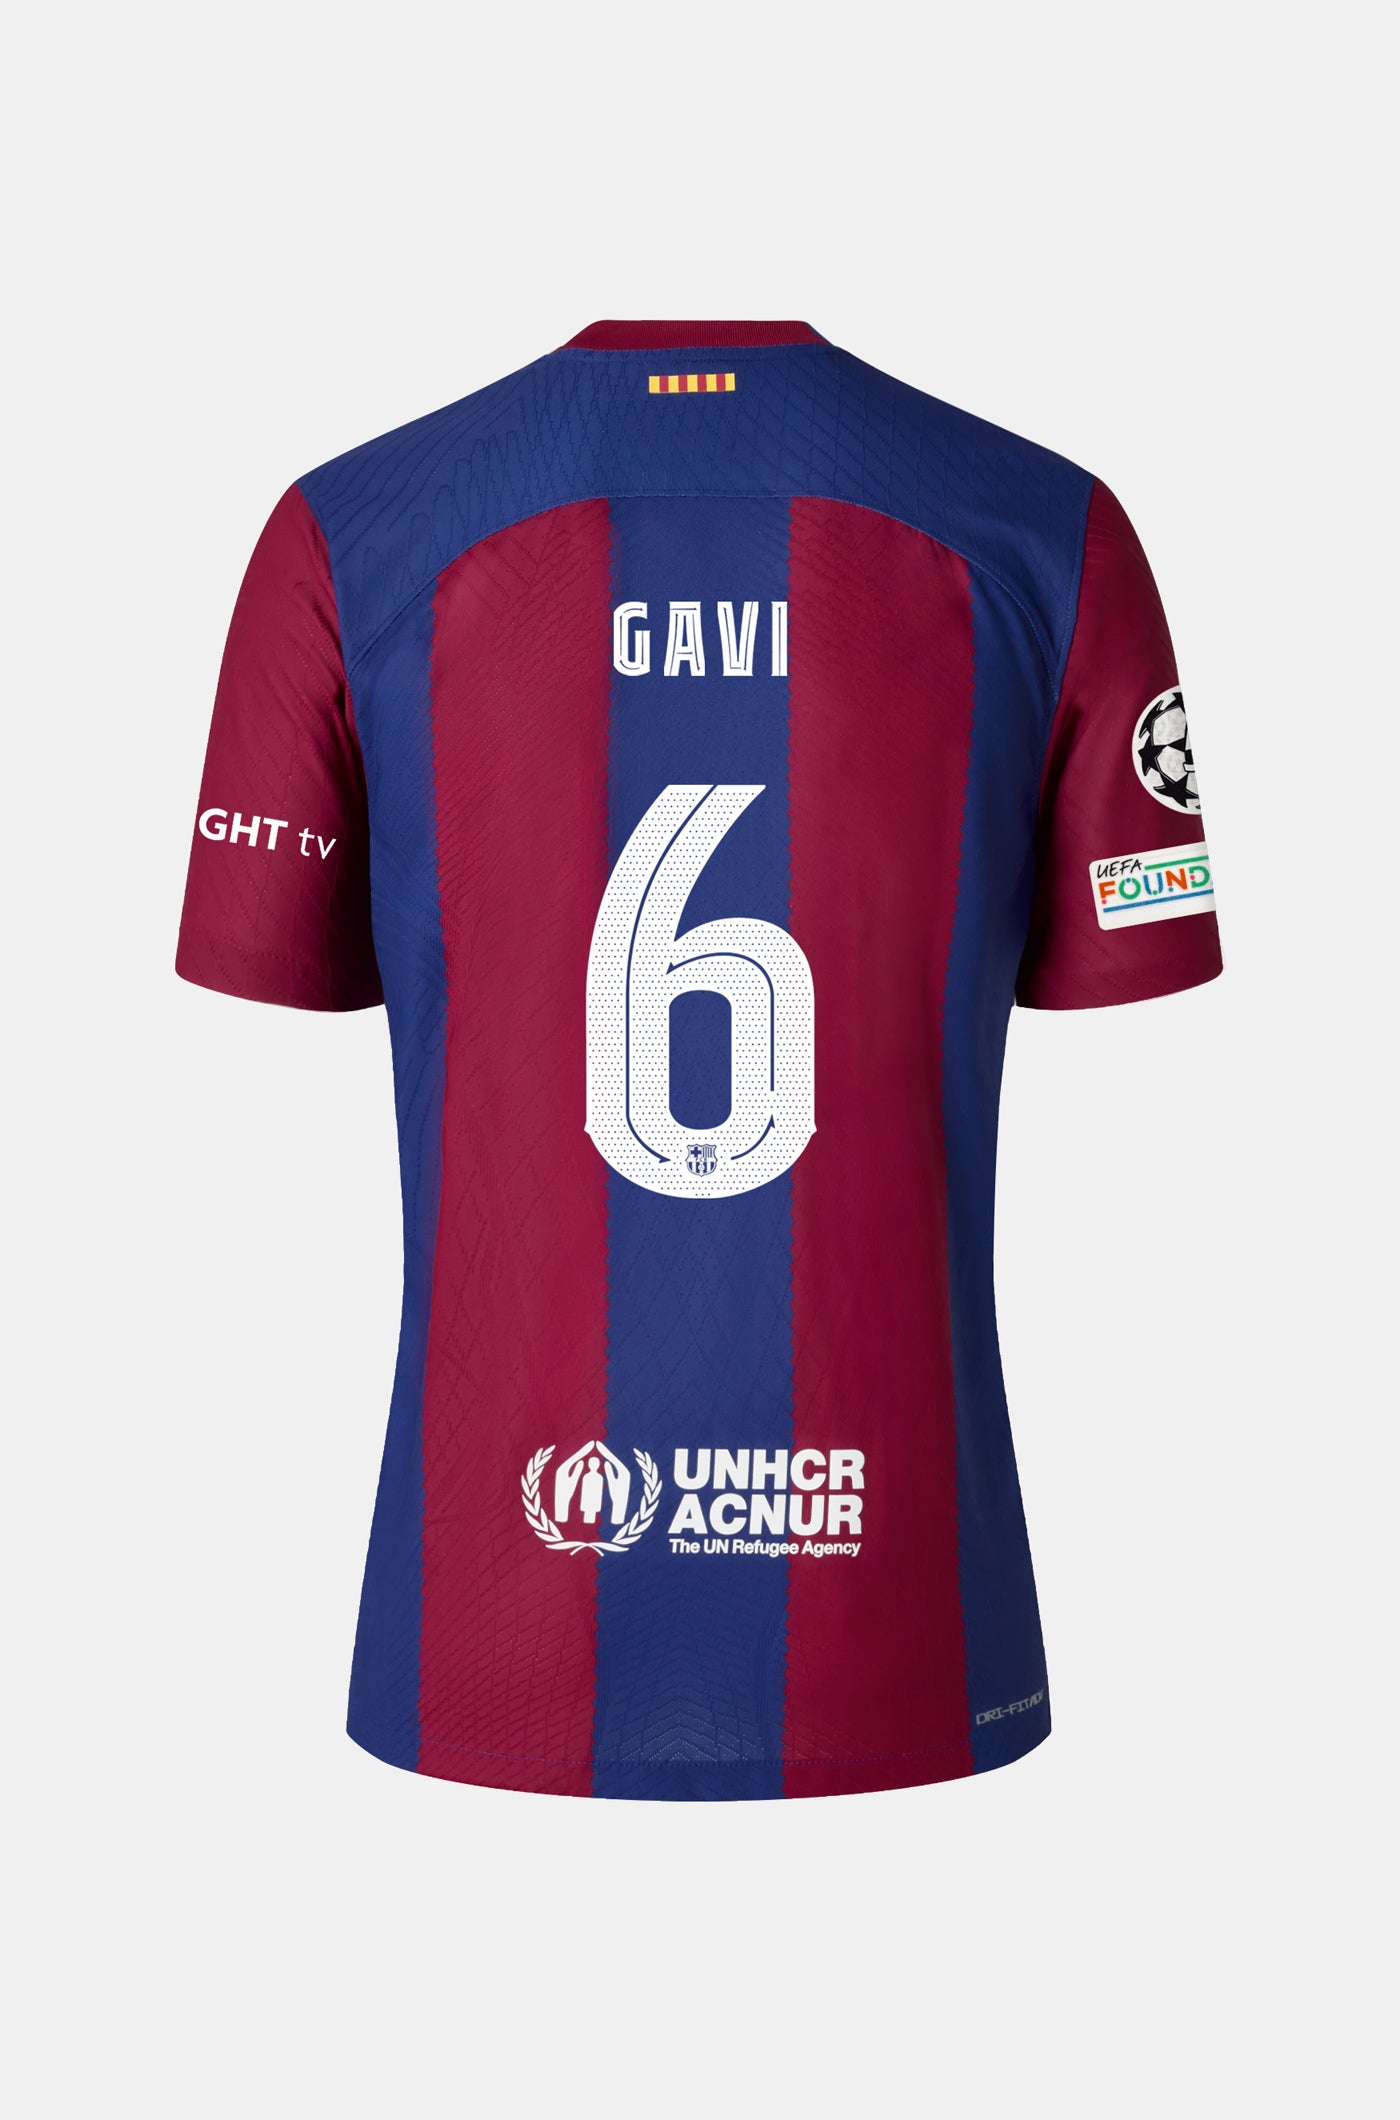 6. Gavi – Barça Official Store Spotify Camp Nou